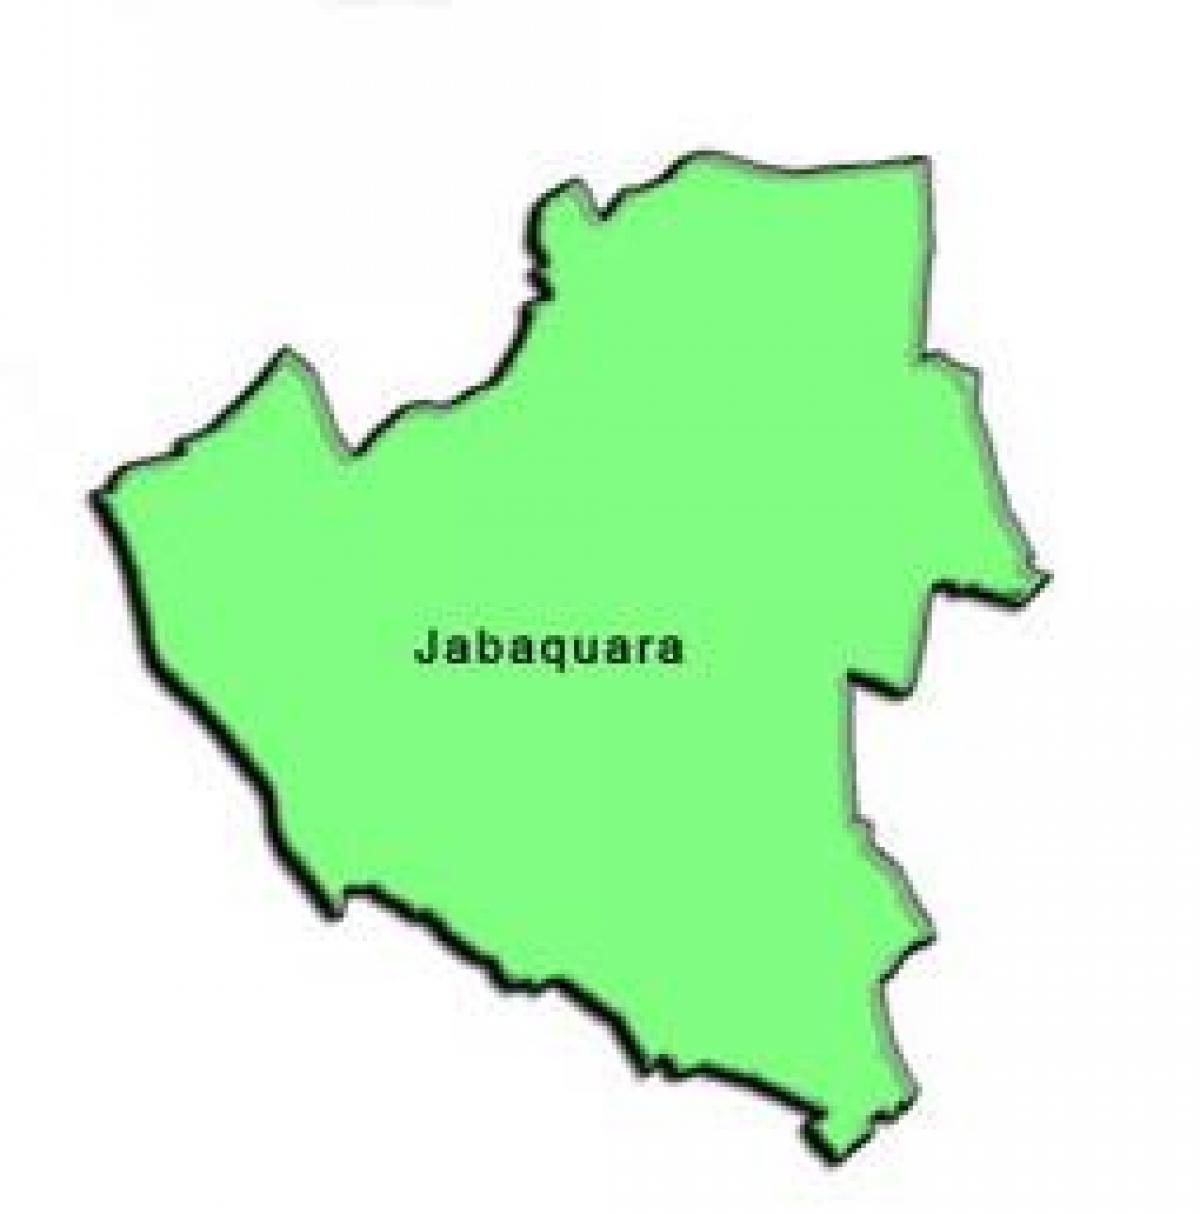 Kort over Jabaquara sub-præfekturet